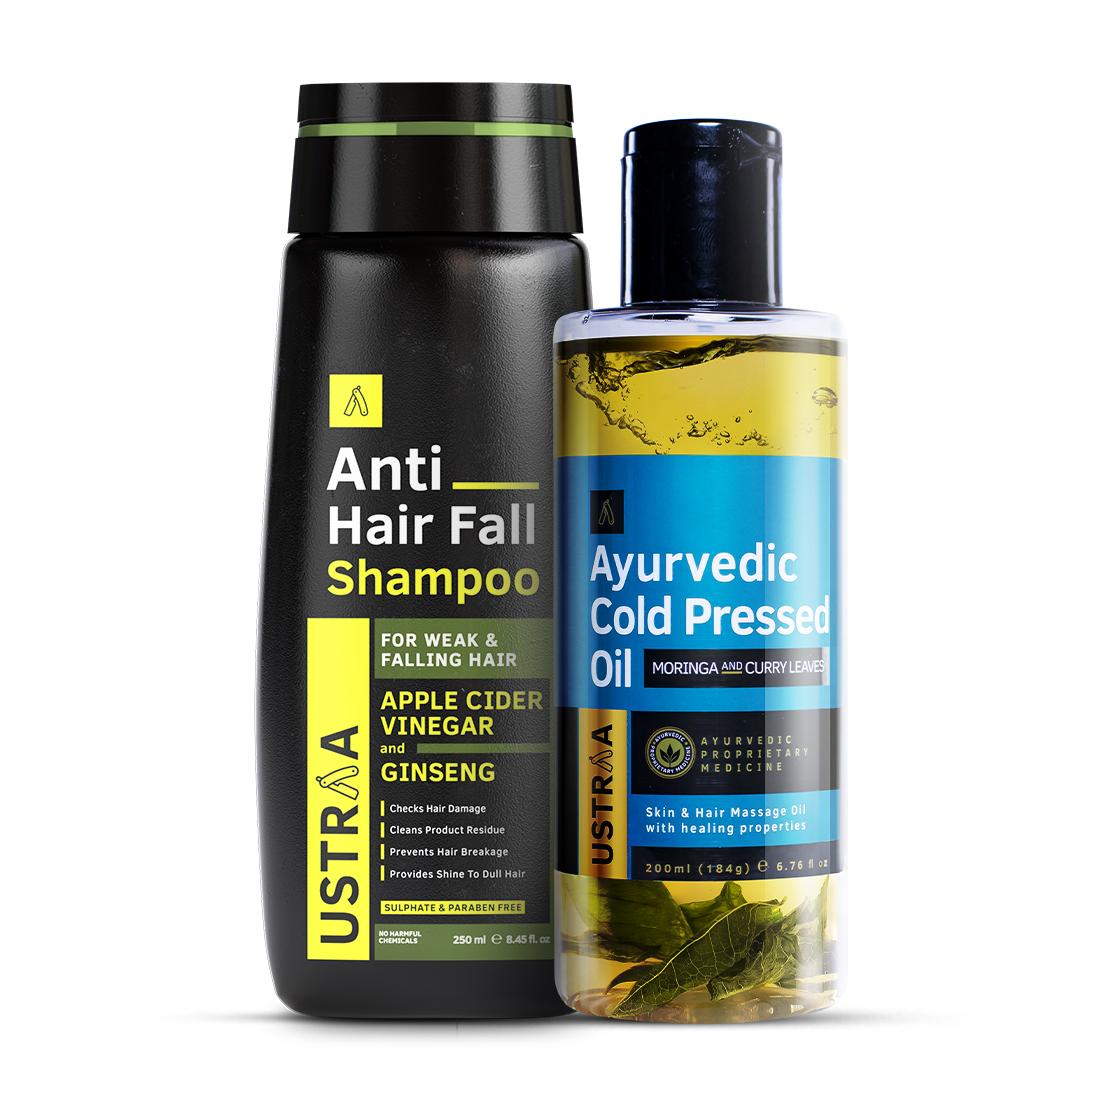 Ayurvedic Cold Pressed Oil & Anti Hair Fall Shampoo